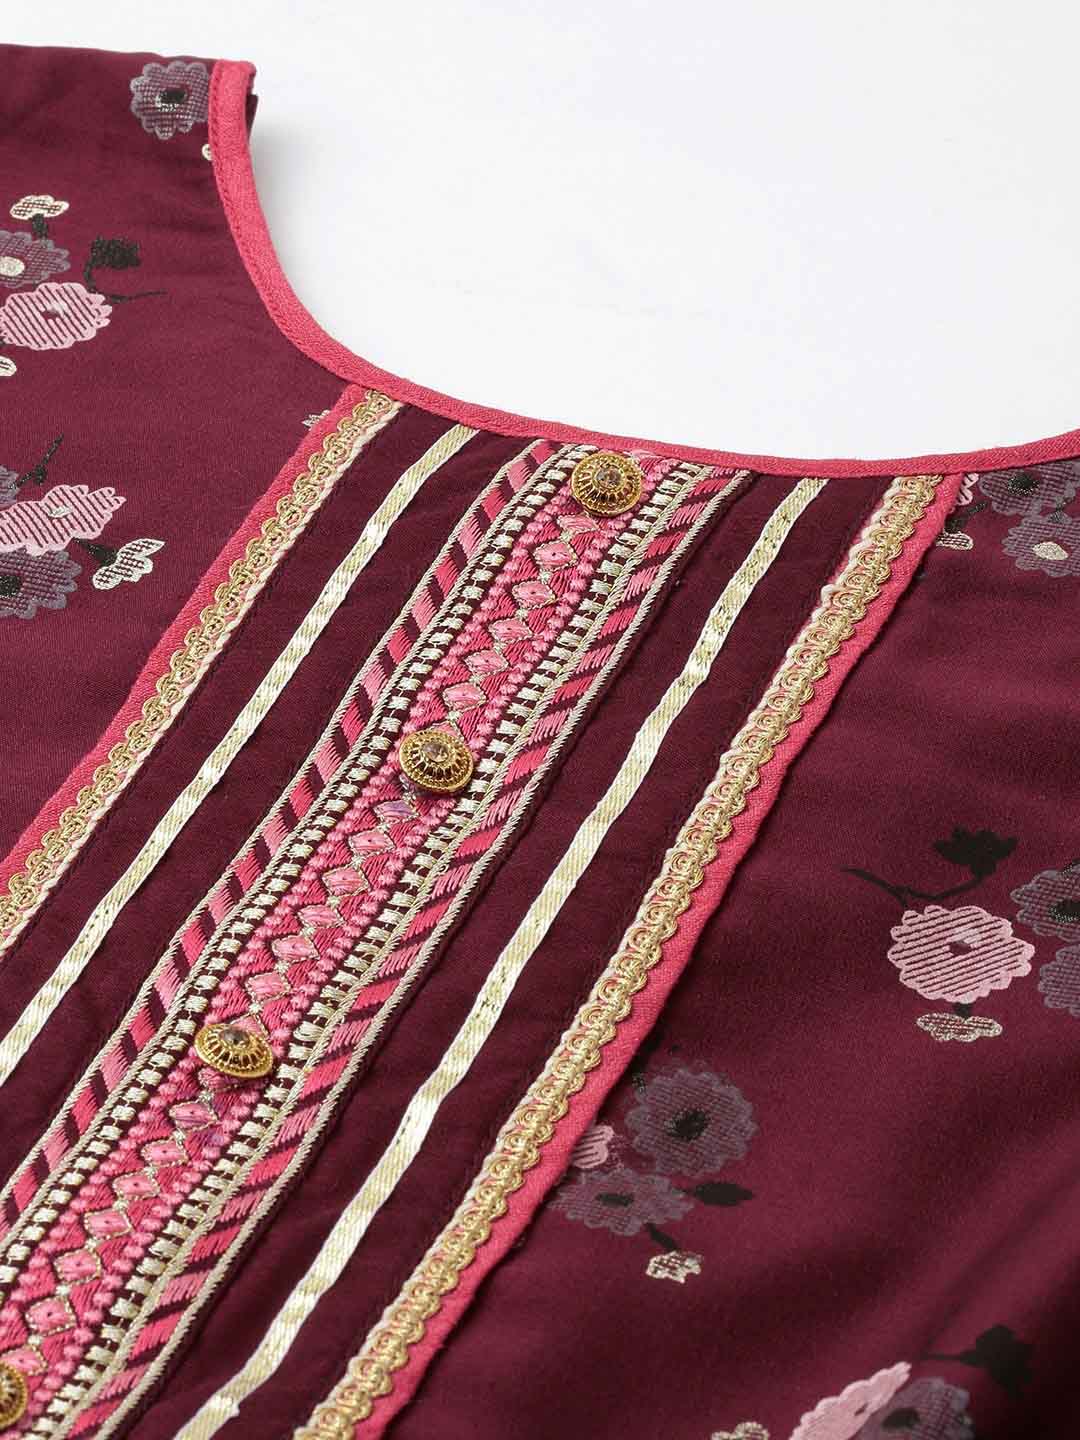 Maroon Unstitched Embroidered Cotton Salwar Suit Dress Material - Stilento